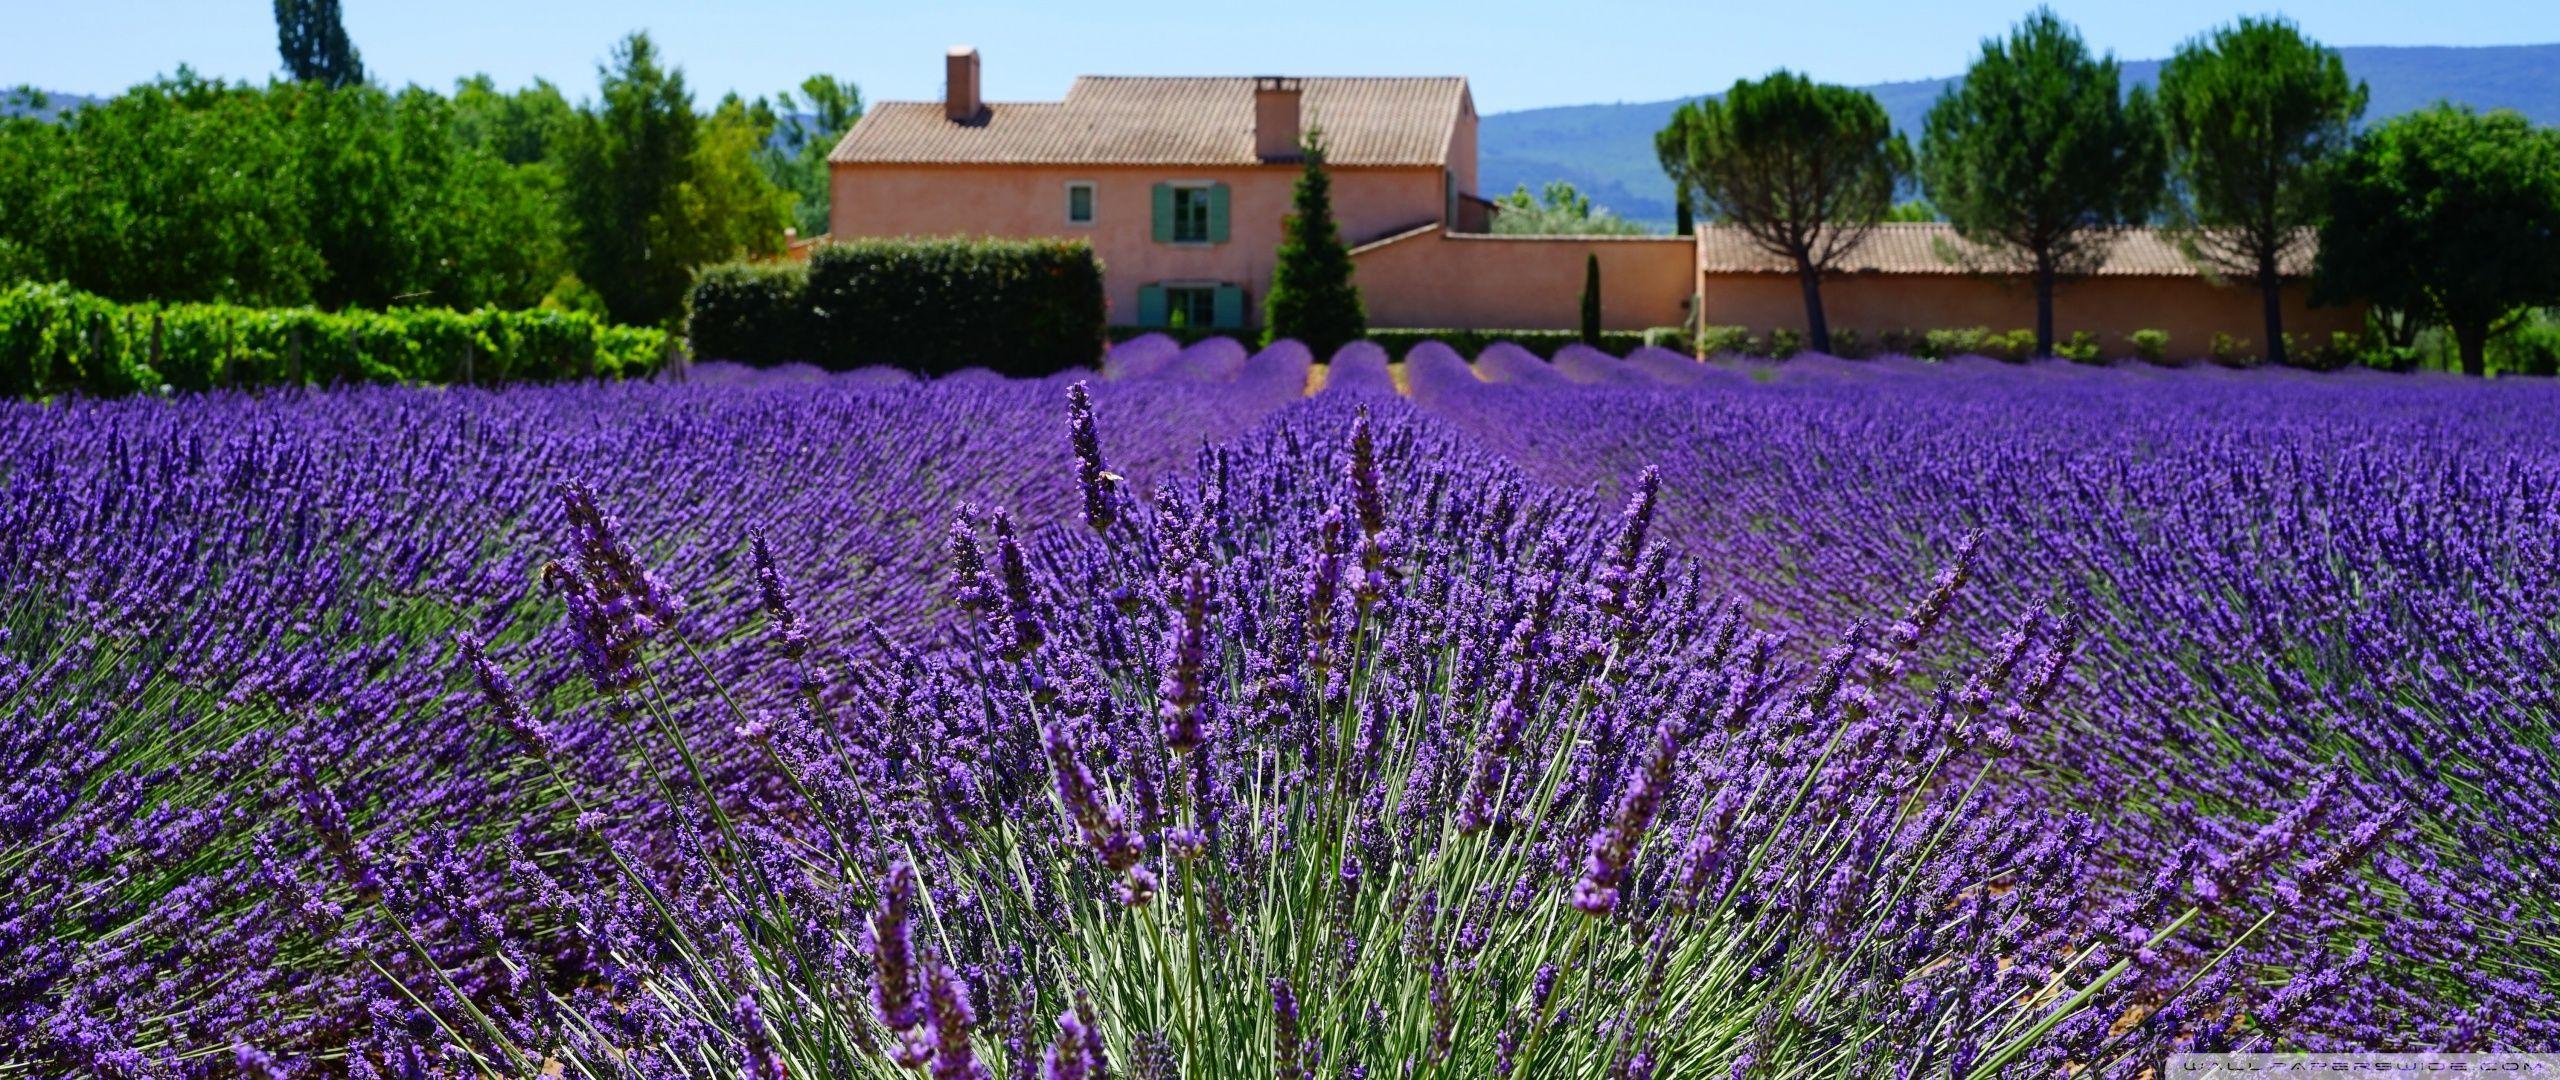 2560 x 1080 · jpeg - Lavender Fields France Wallpapers - Wallpaper Cave